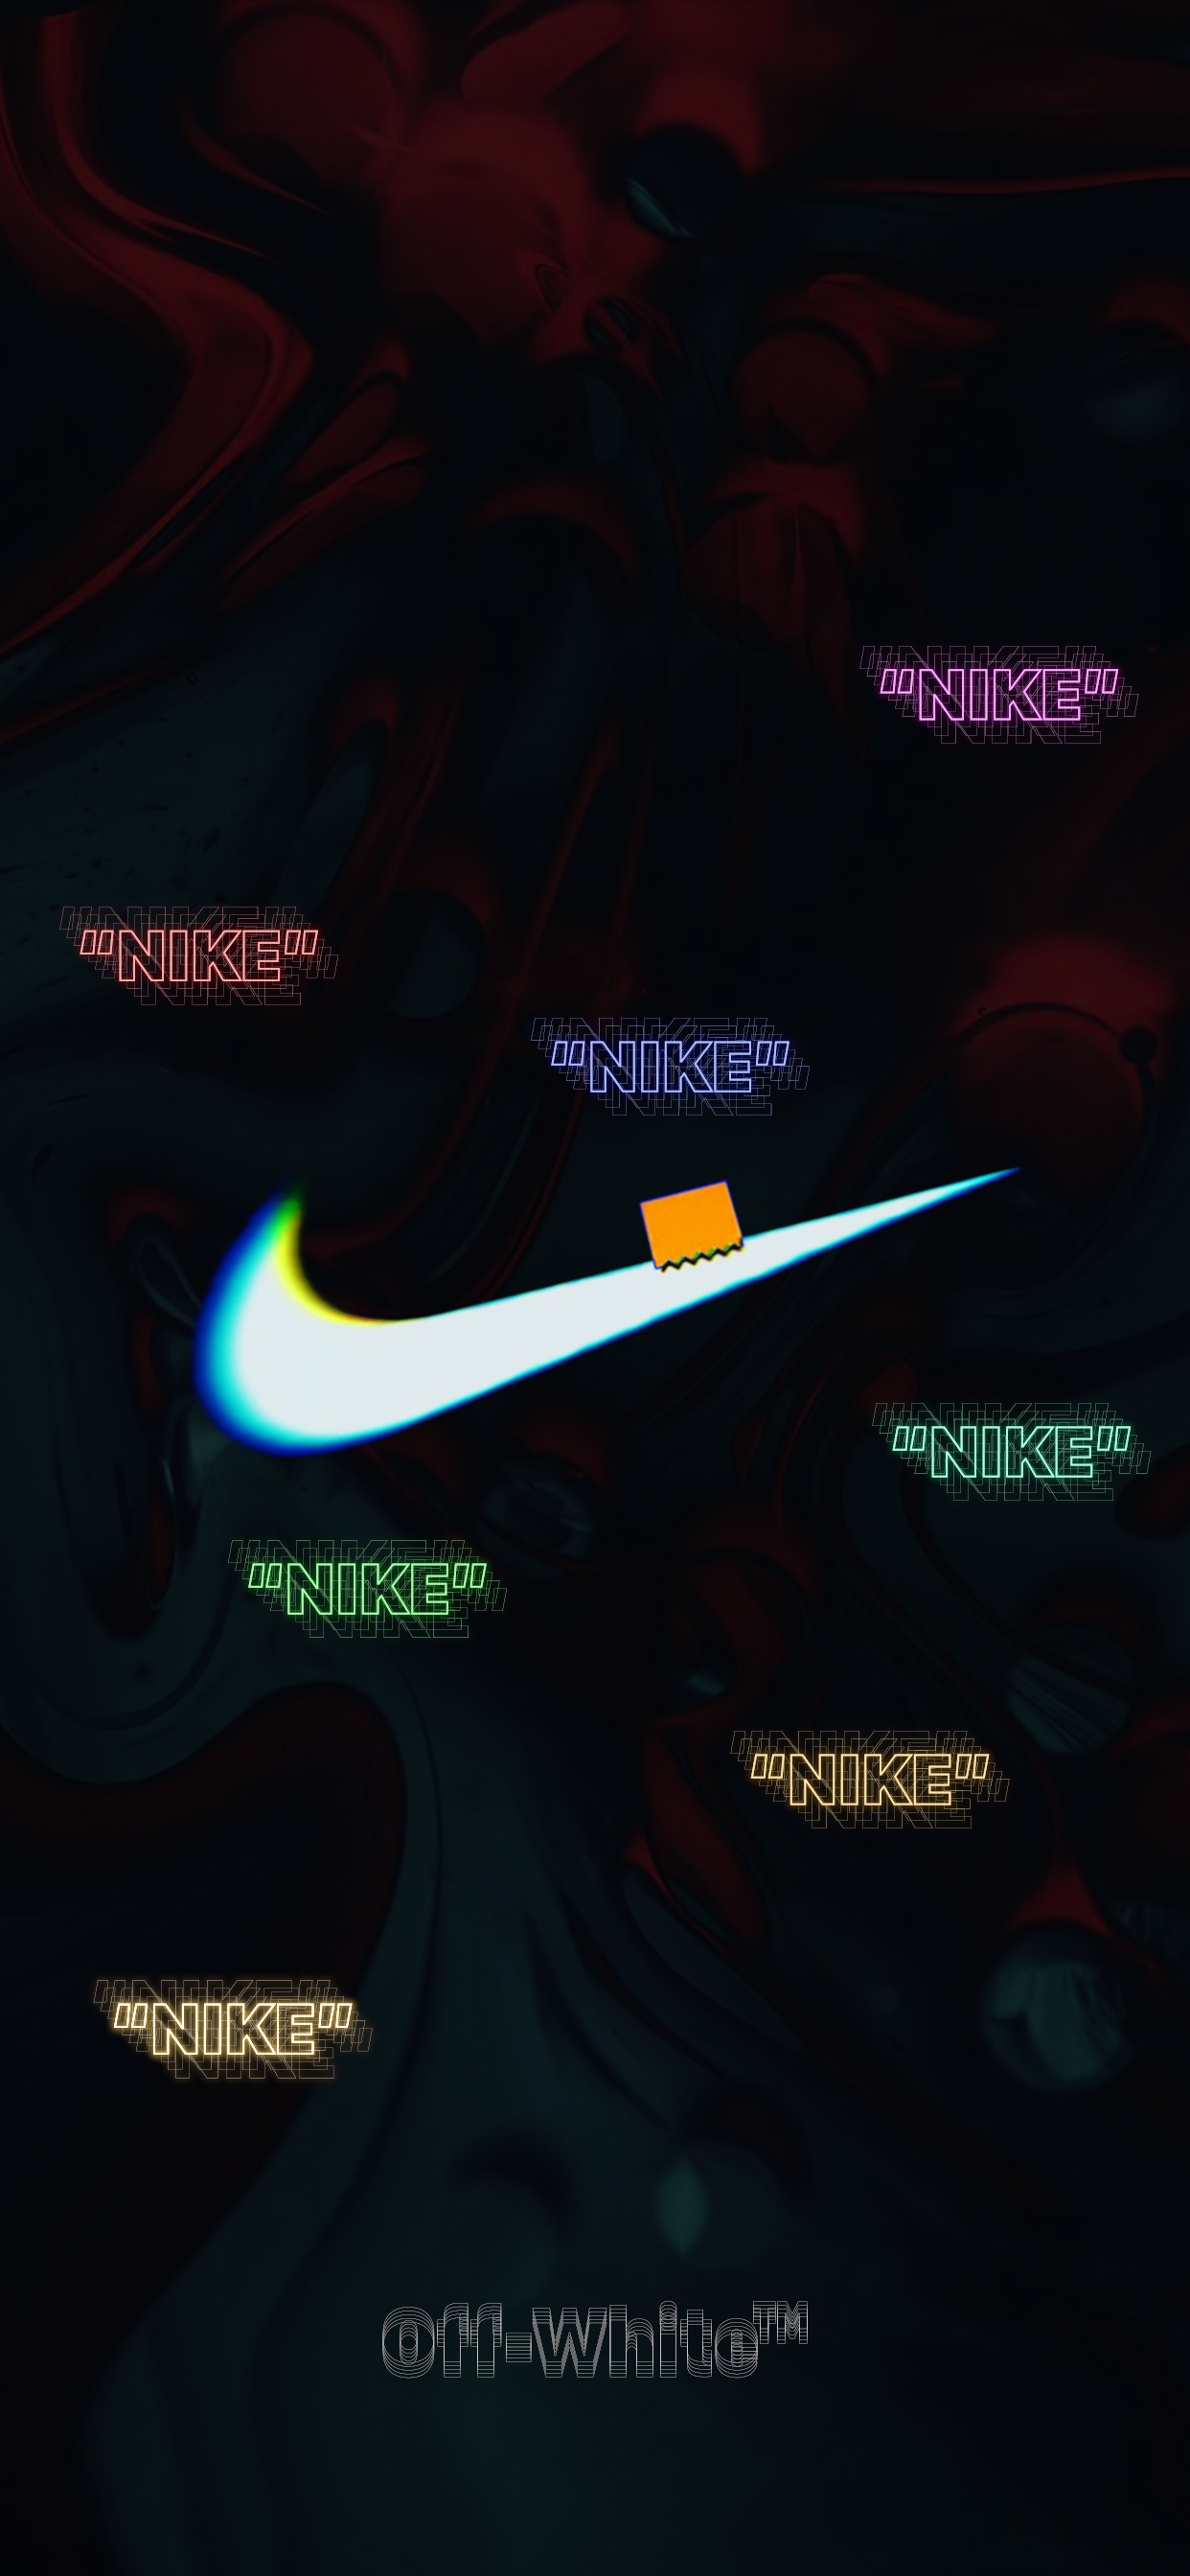 Nike X OffWhite Wallpaper Hypebeast iphone wallpaper Bape